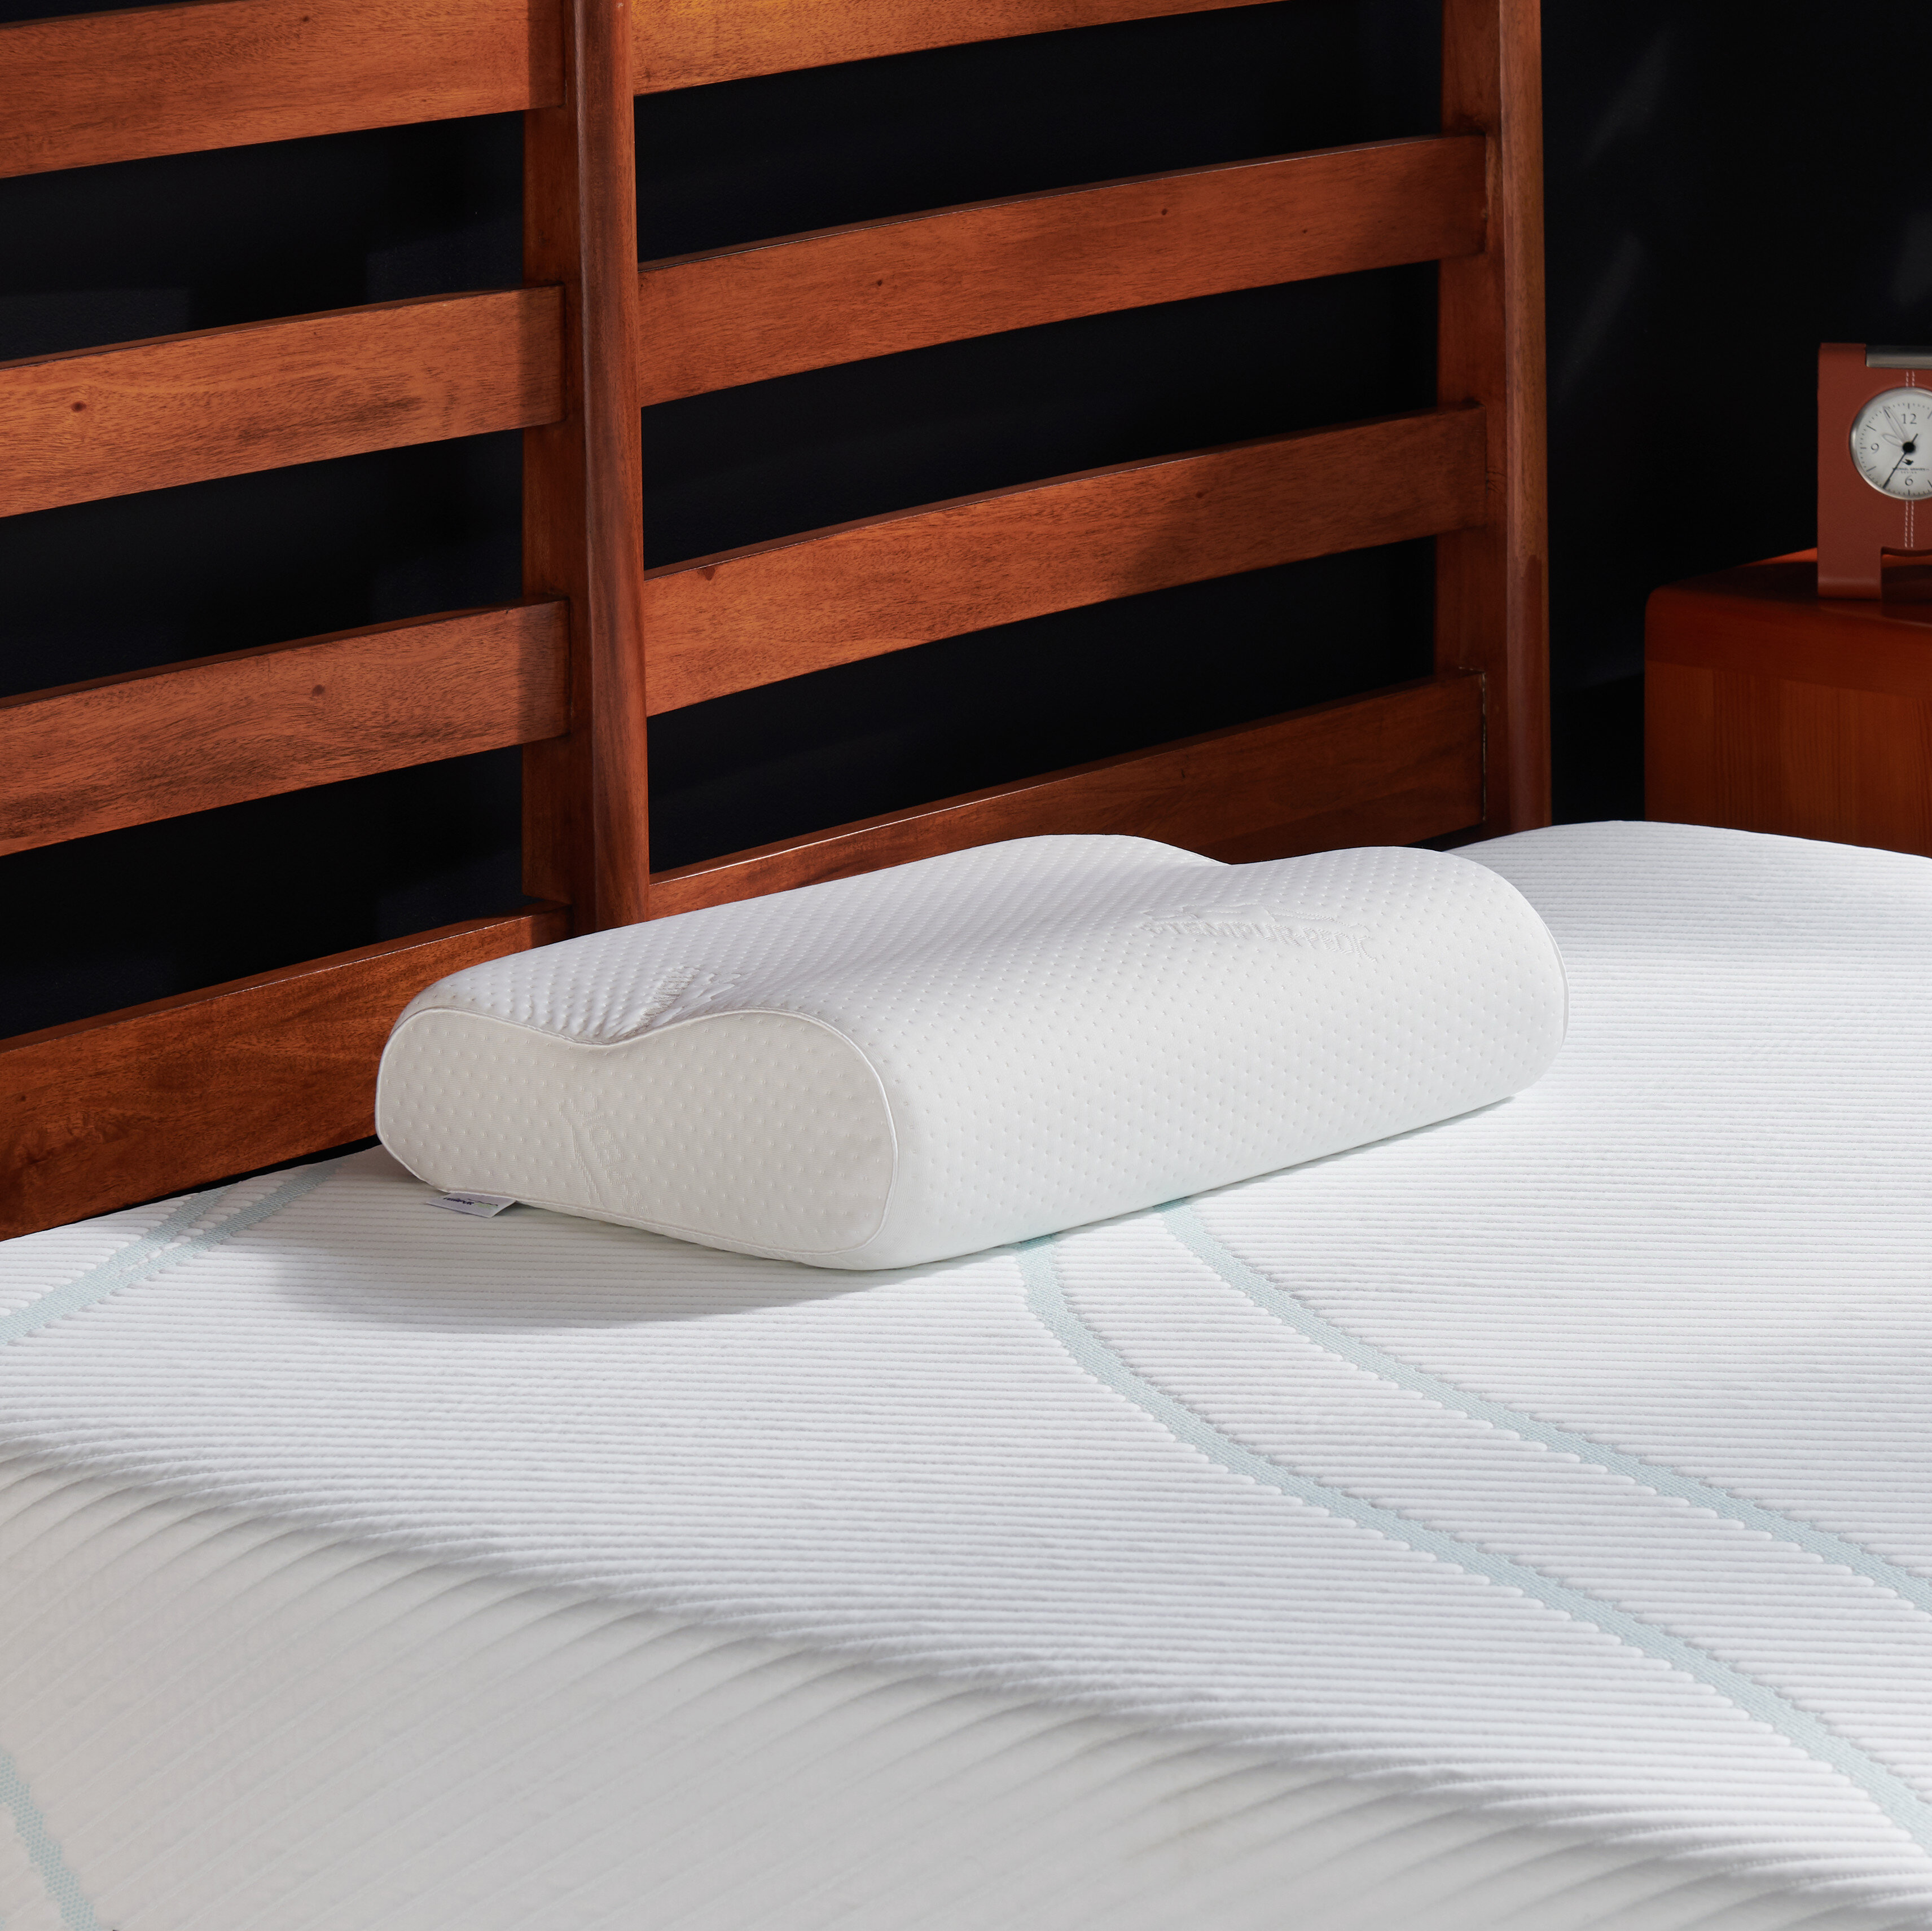 MyPillow 2.0 Cooling Bed Pillow, 2-Pack Queen Medium : Home & Kitchen 